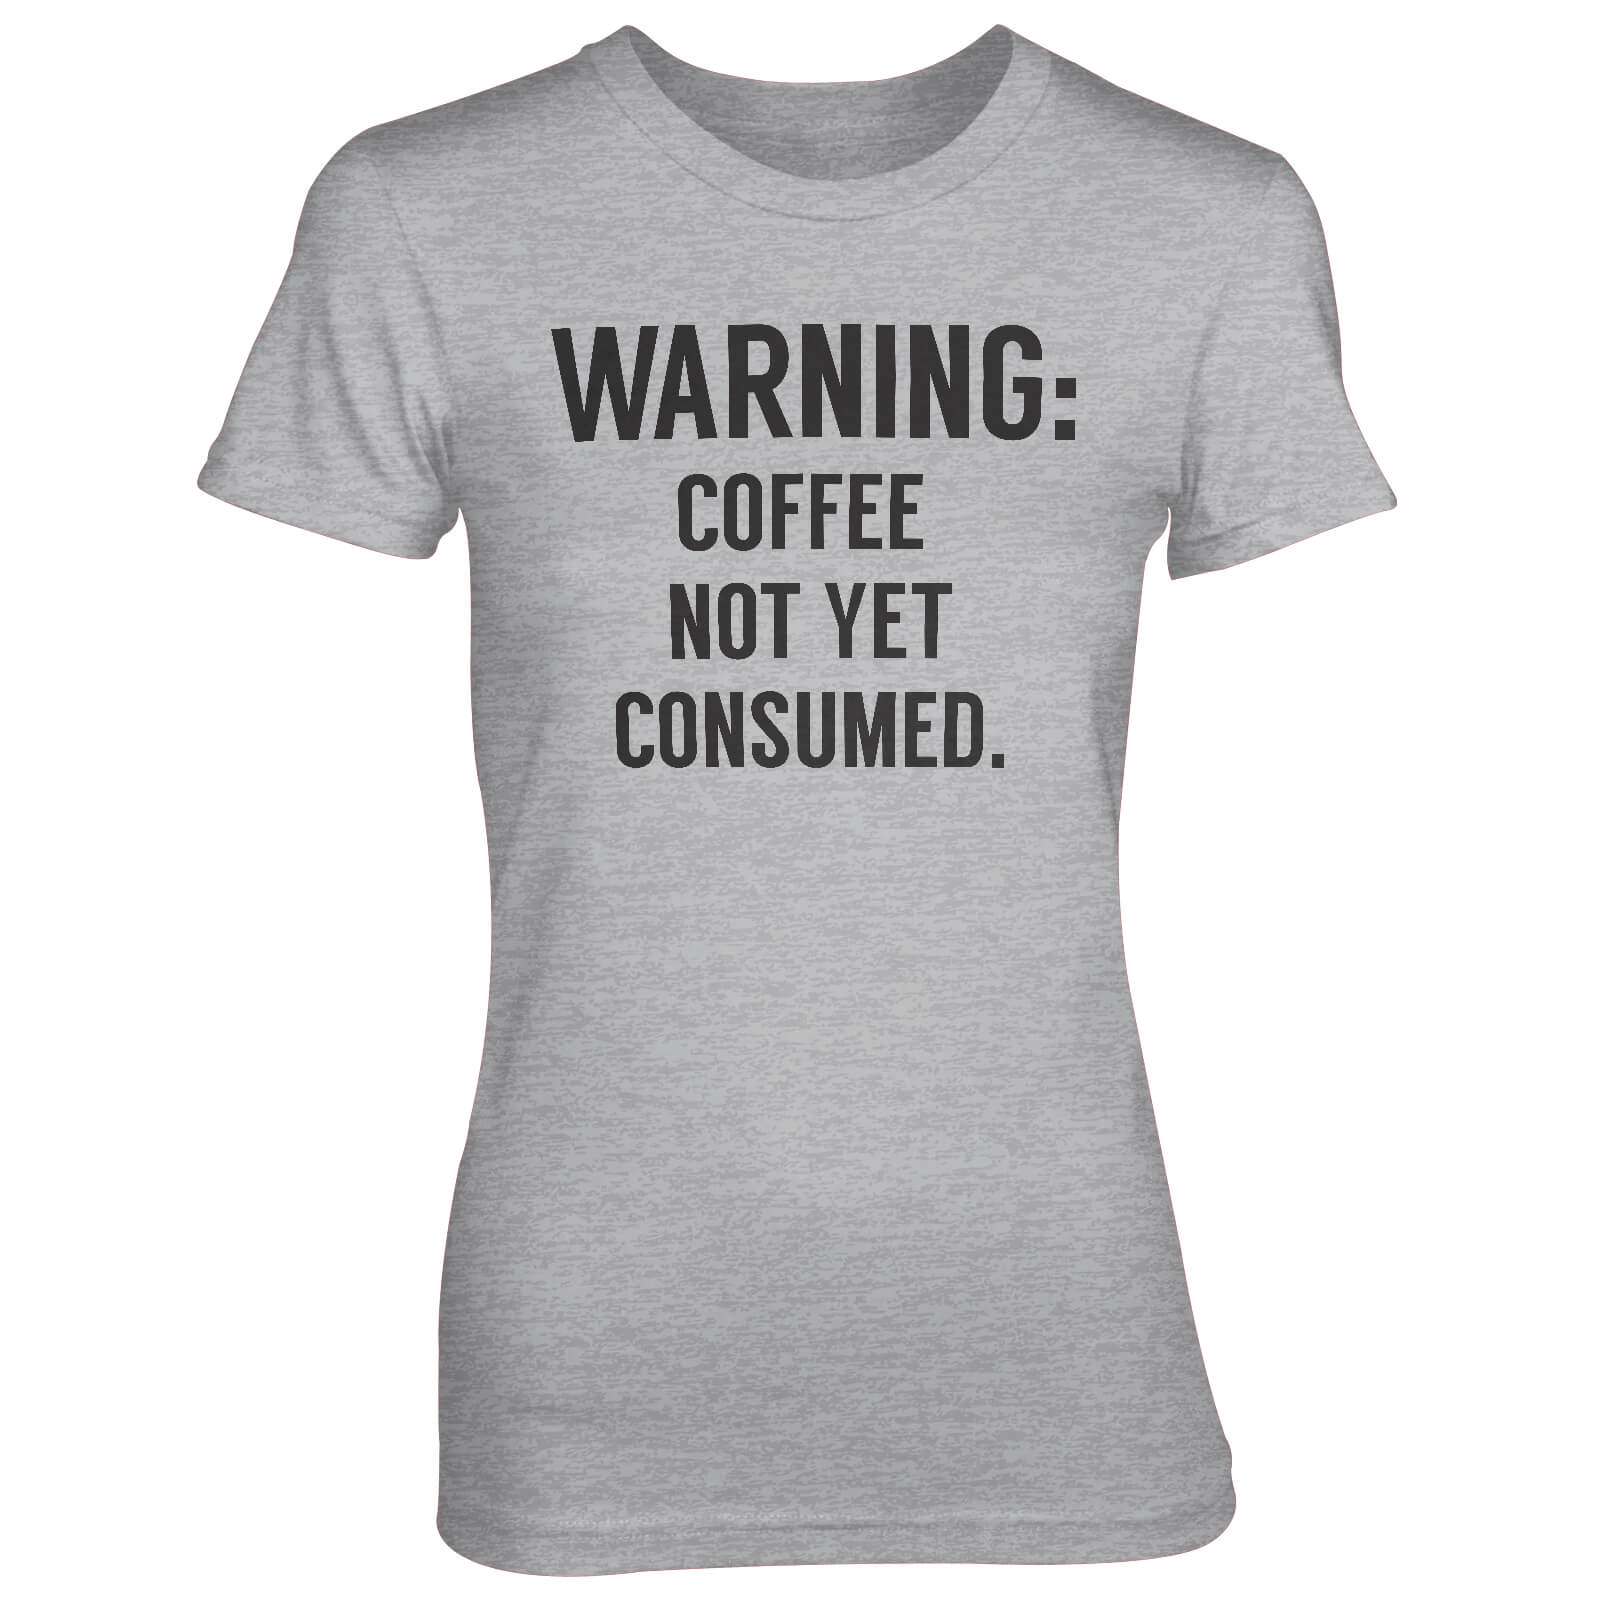 Warning: Coffee Not Yet Consumed Women's Grey T-Shirt - S - Grey